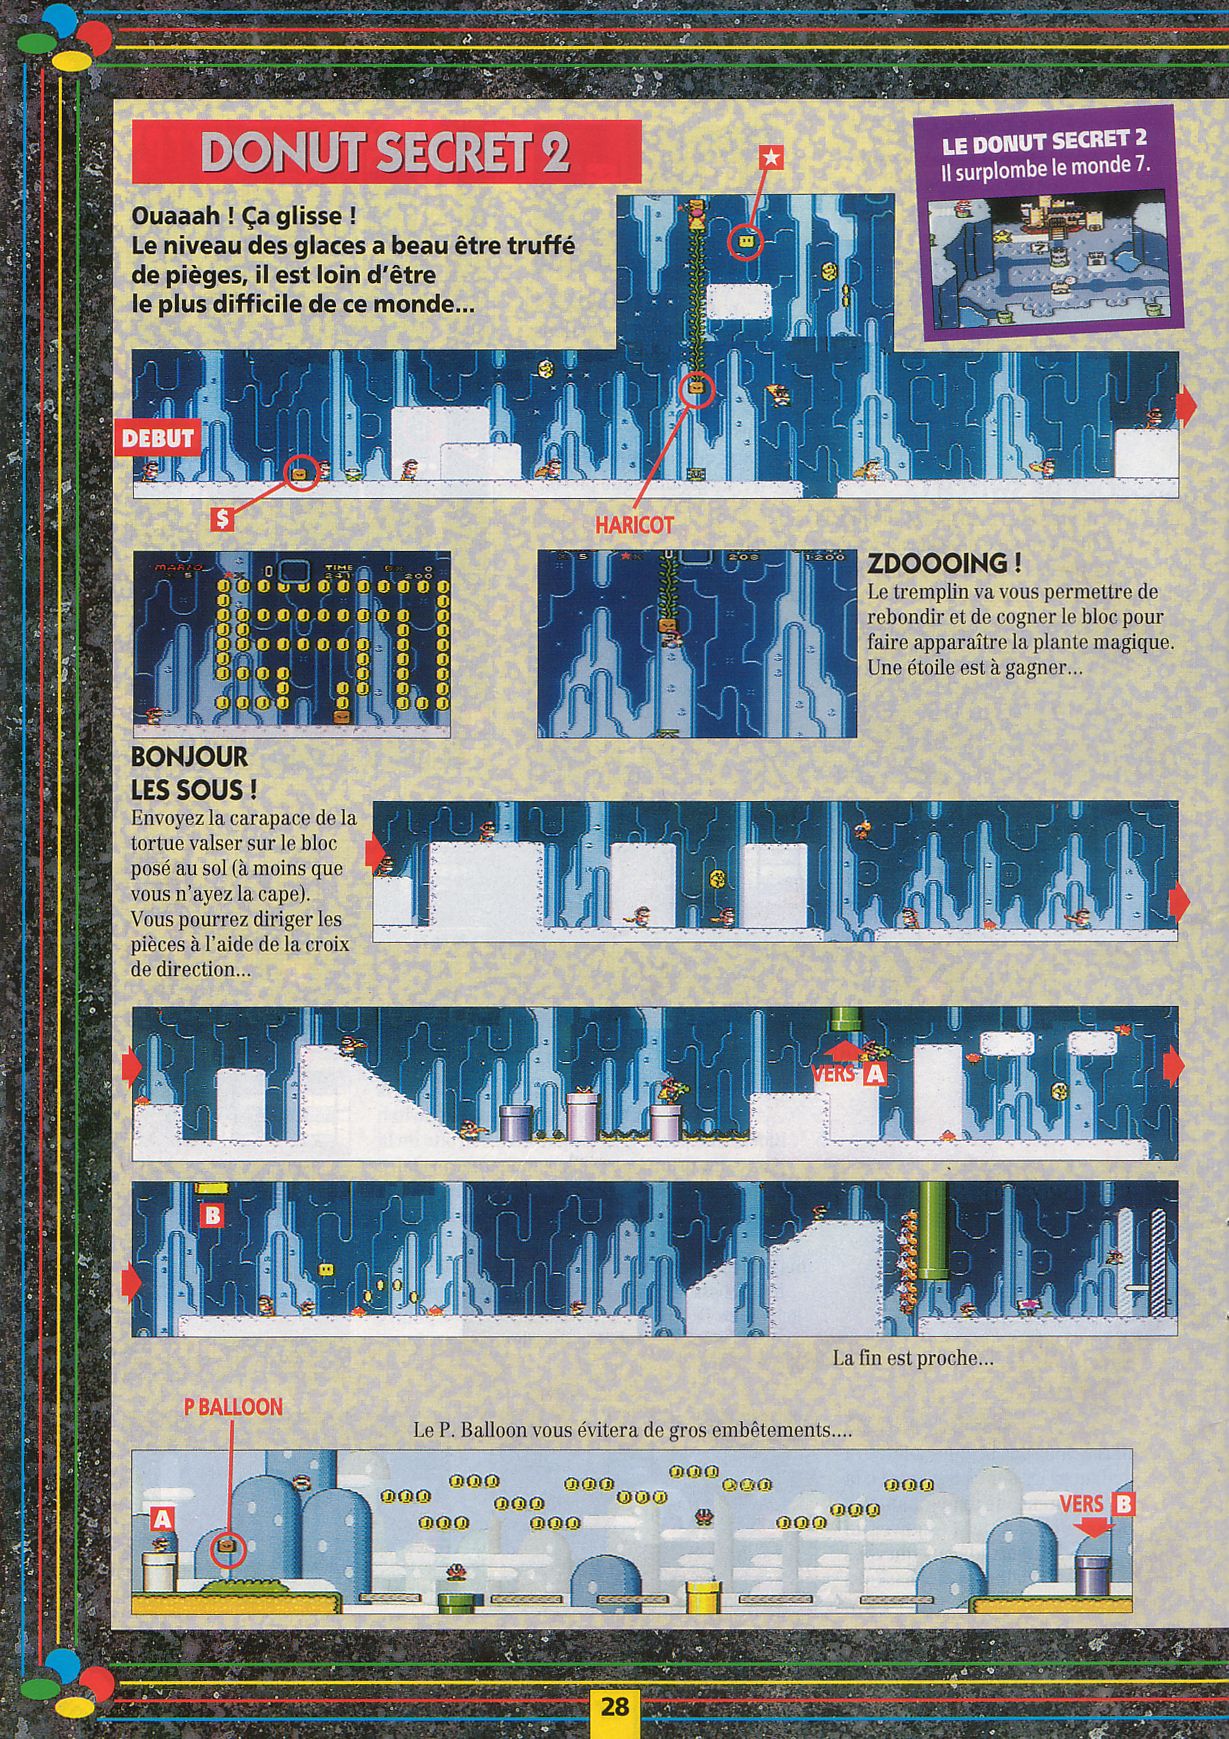 [TEST] Super Mario World (Super Famicom) Nintendo%20Player%20007%20-%20Page%20028%20%281992-11-12%29